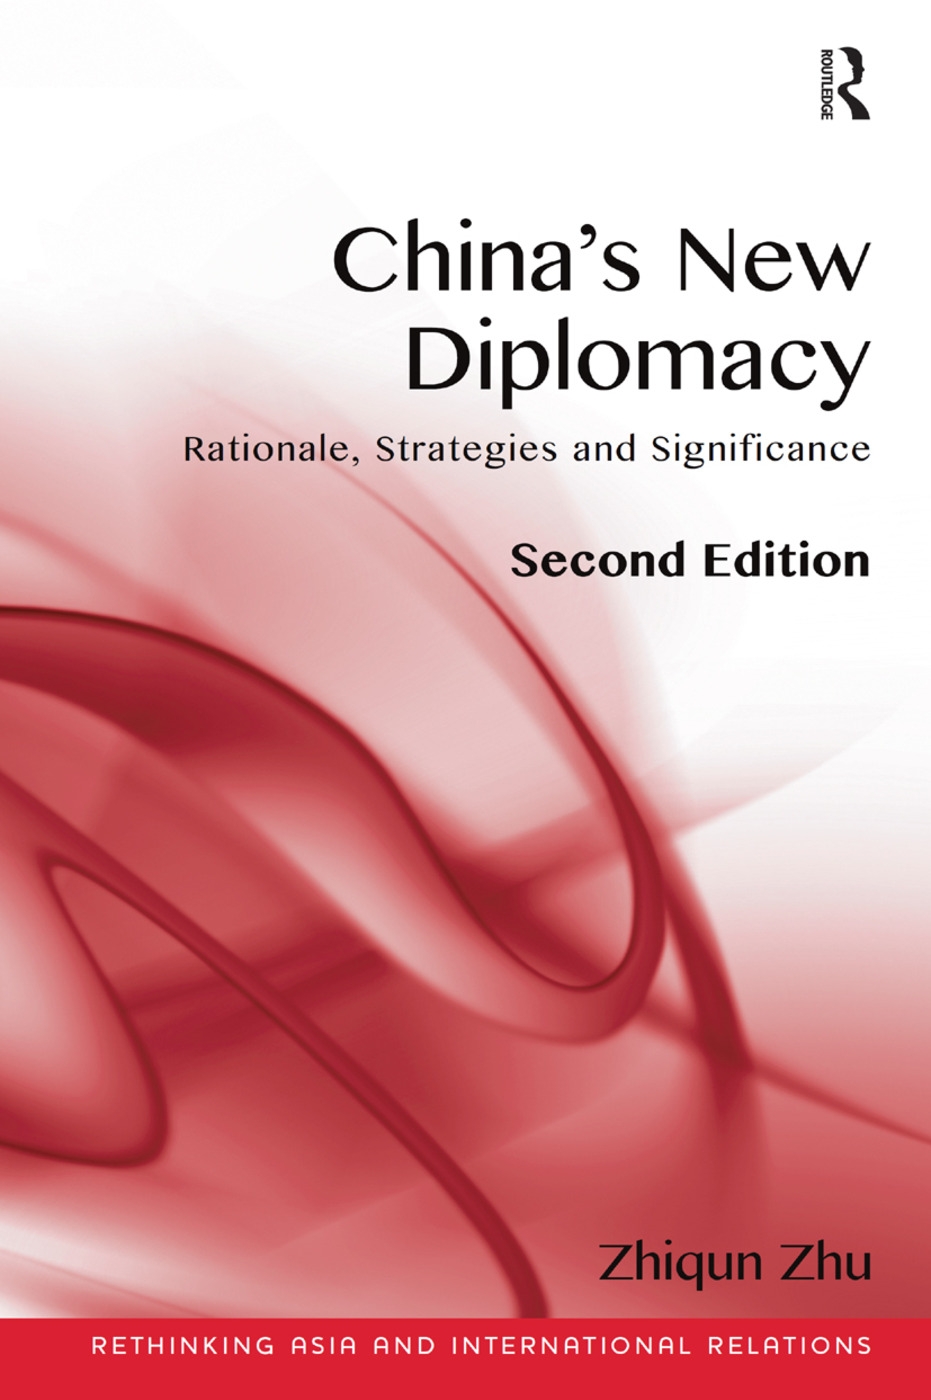 China’s New Diplomacy: Rationale, Strategies and Sigificance. Zhiqun Zhu